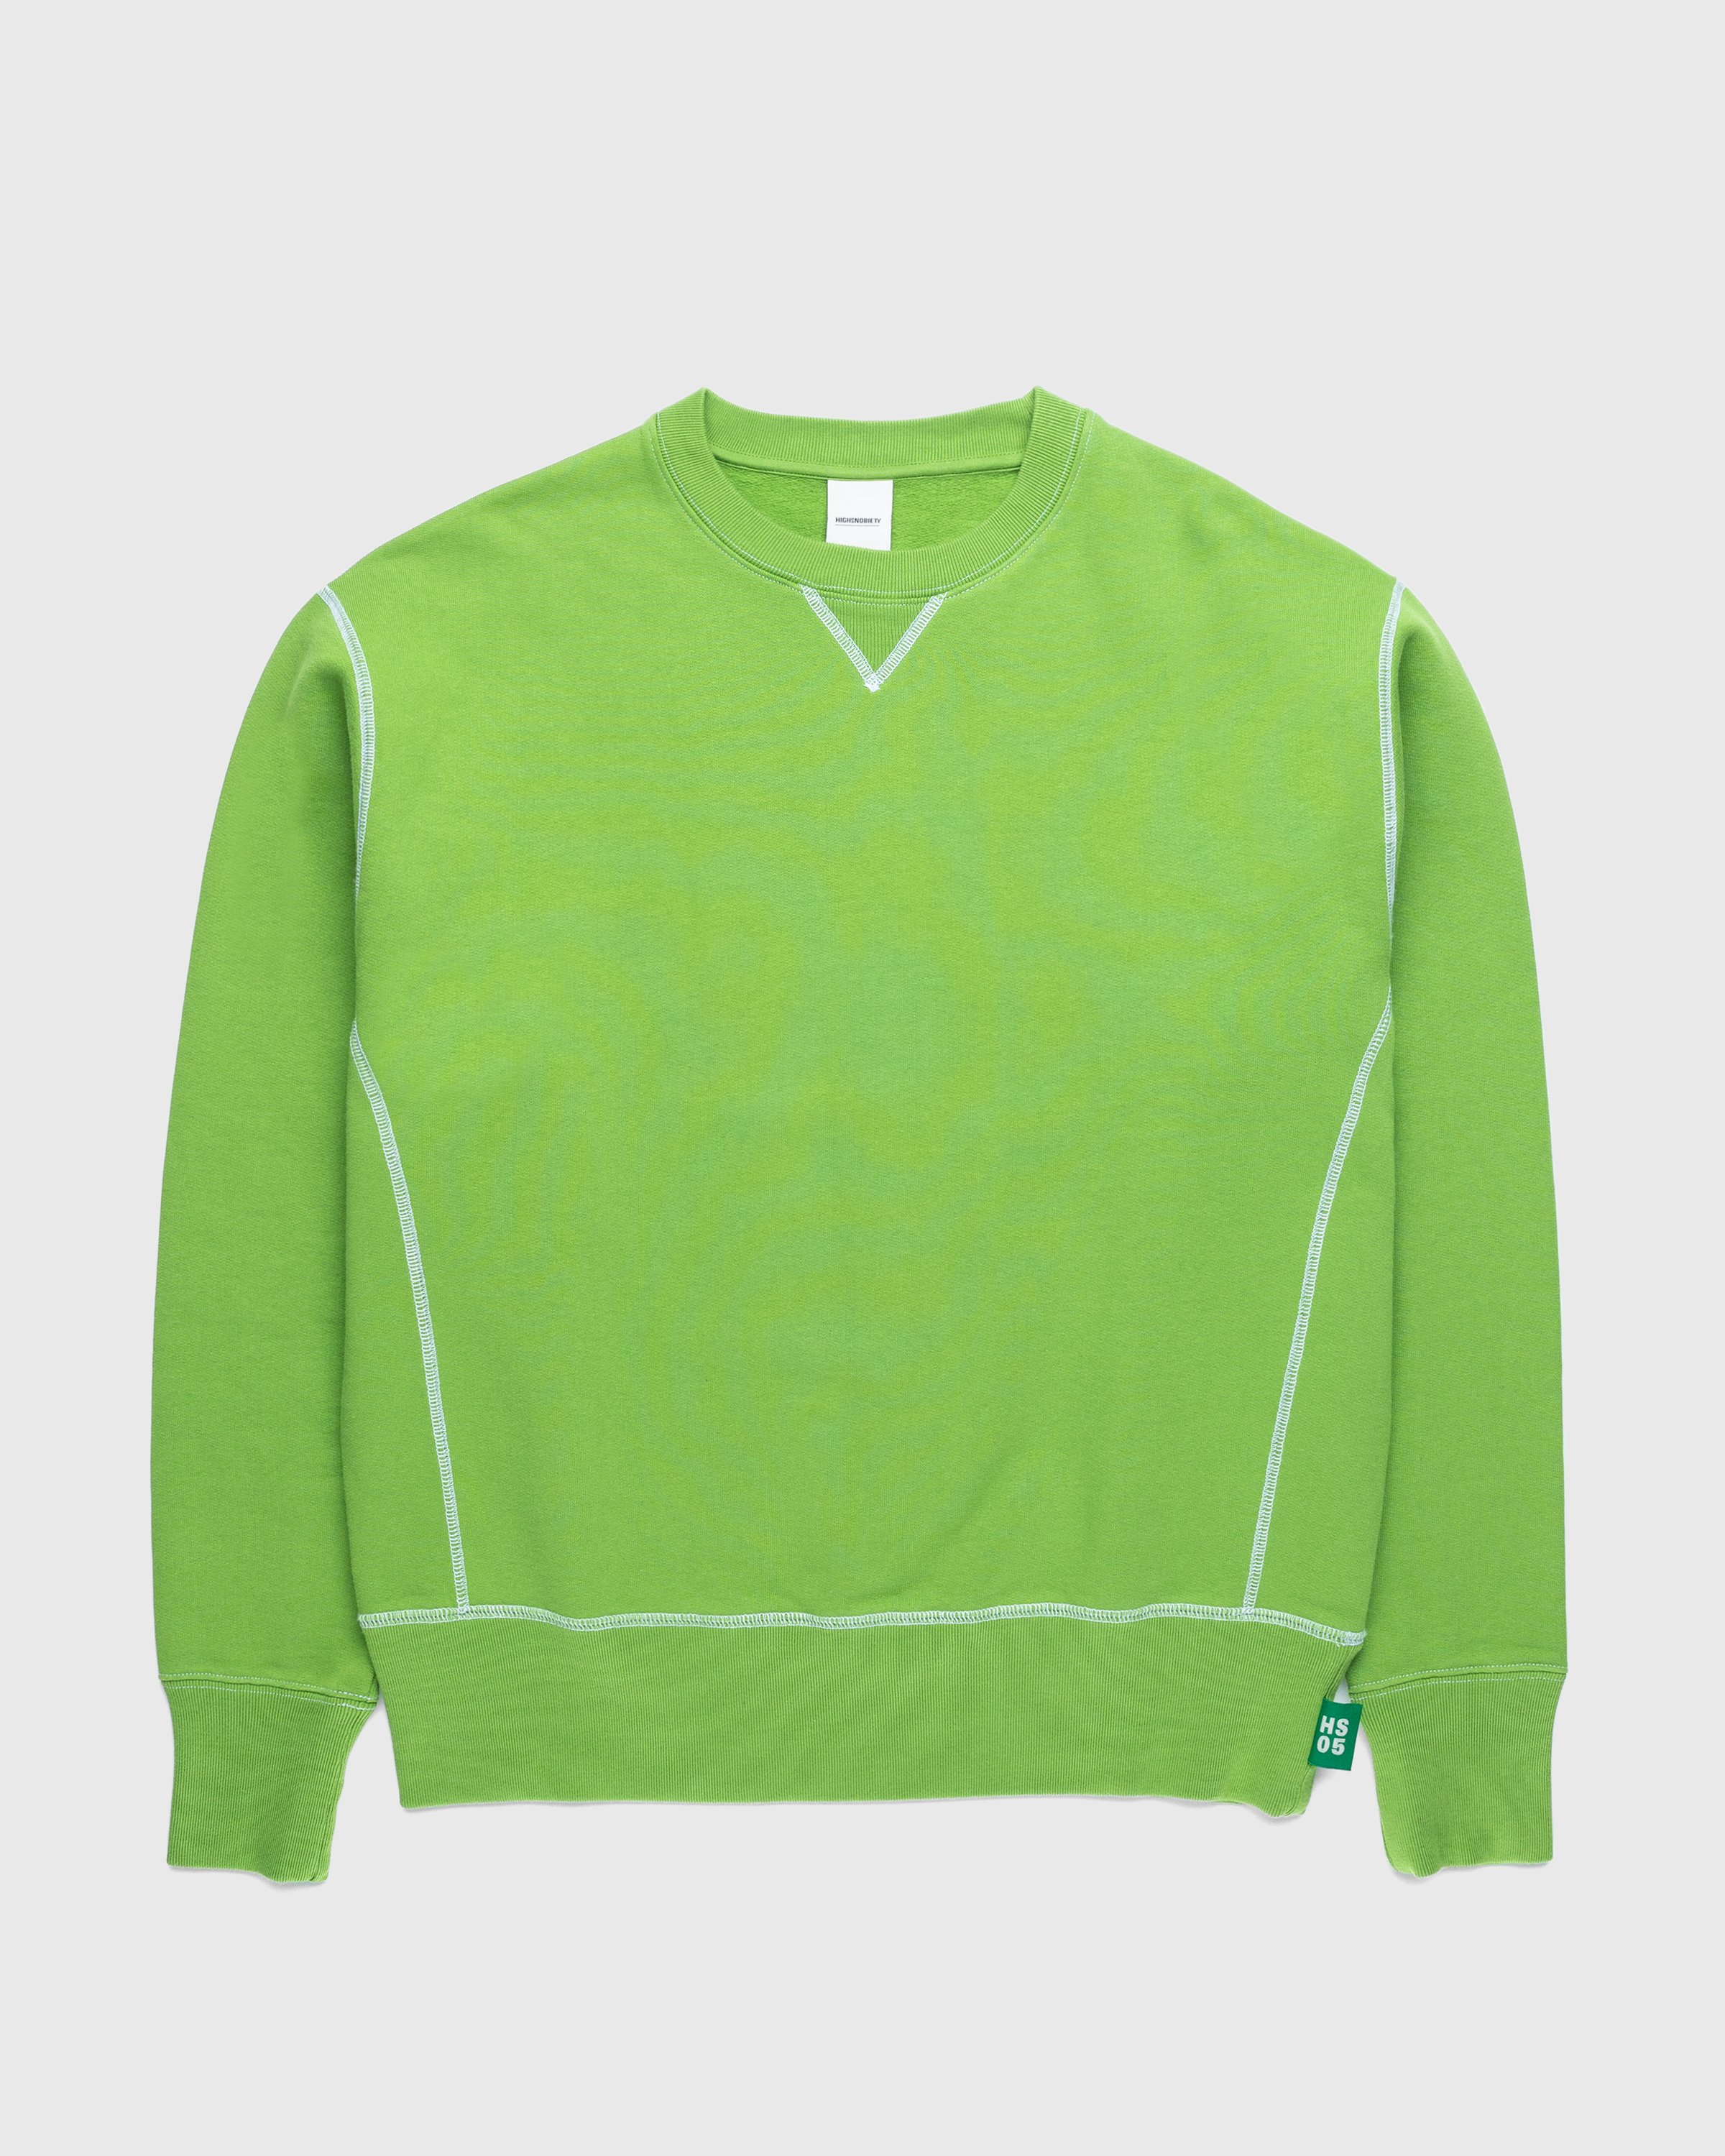 Highsnobiety - Contrast Stitch Fleece Crew Green - Clothing - Green - Image 1